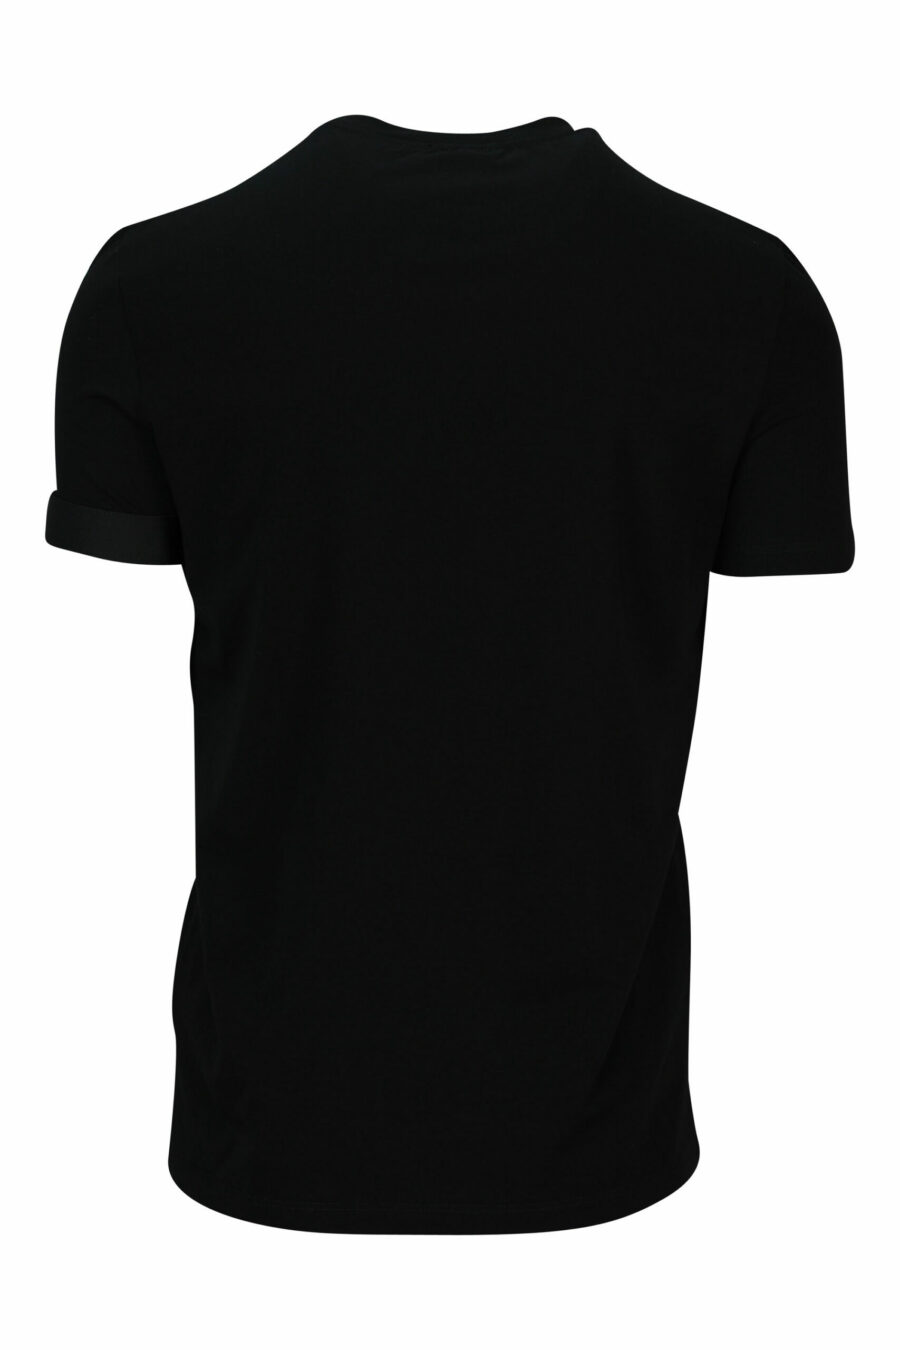 Tee-shirt noir avec petit logo - 8032674767431 2 scaled